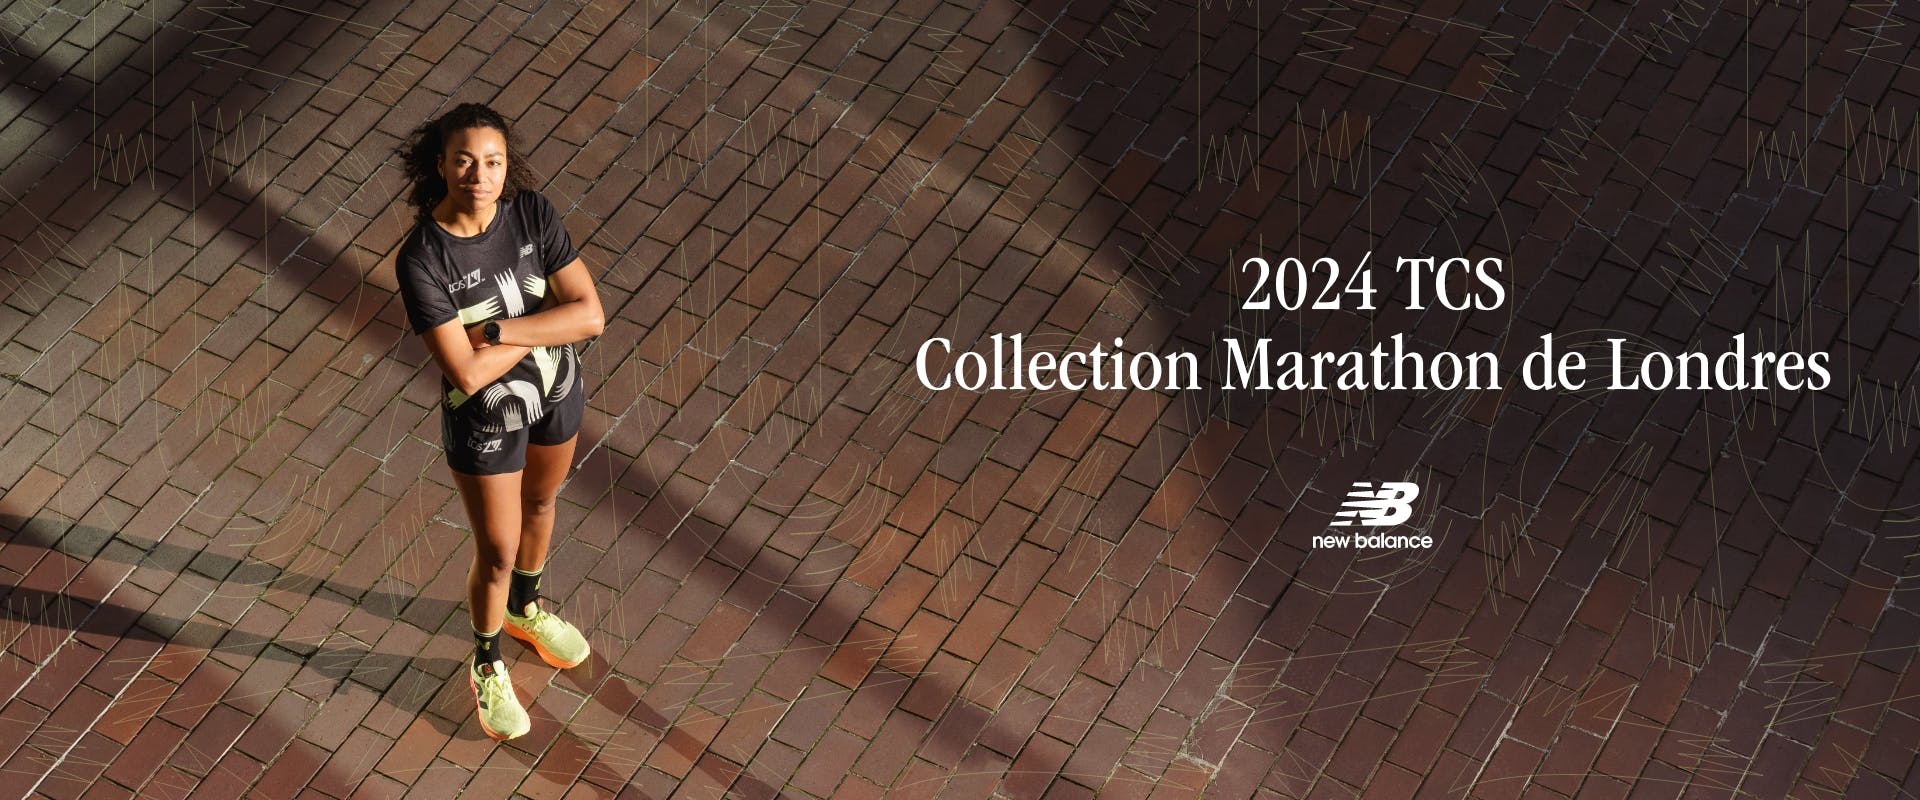 London Marathon Collection